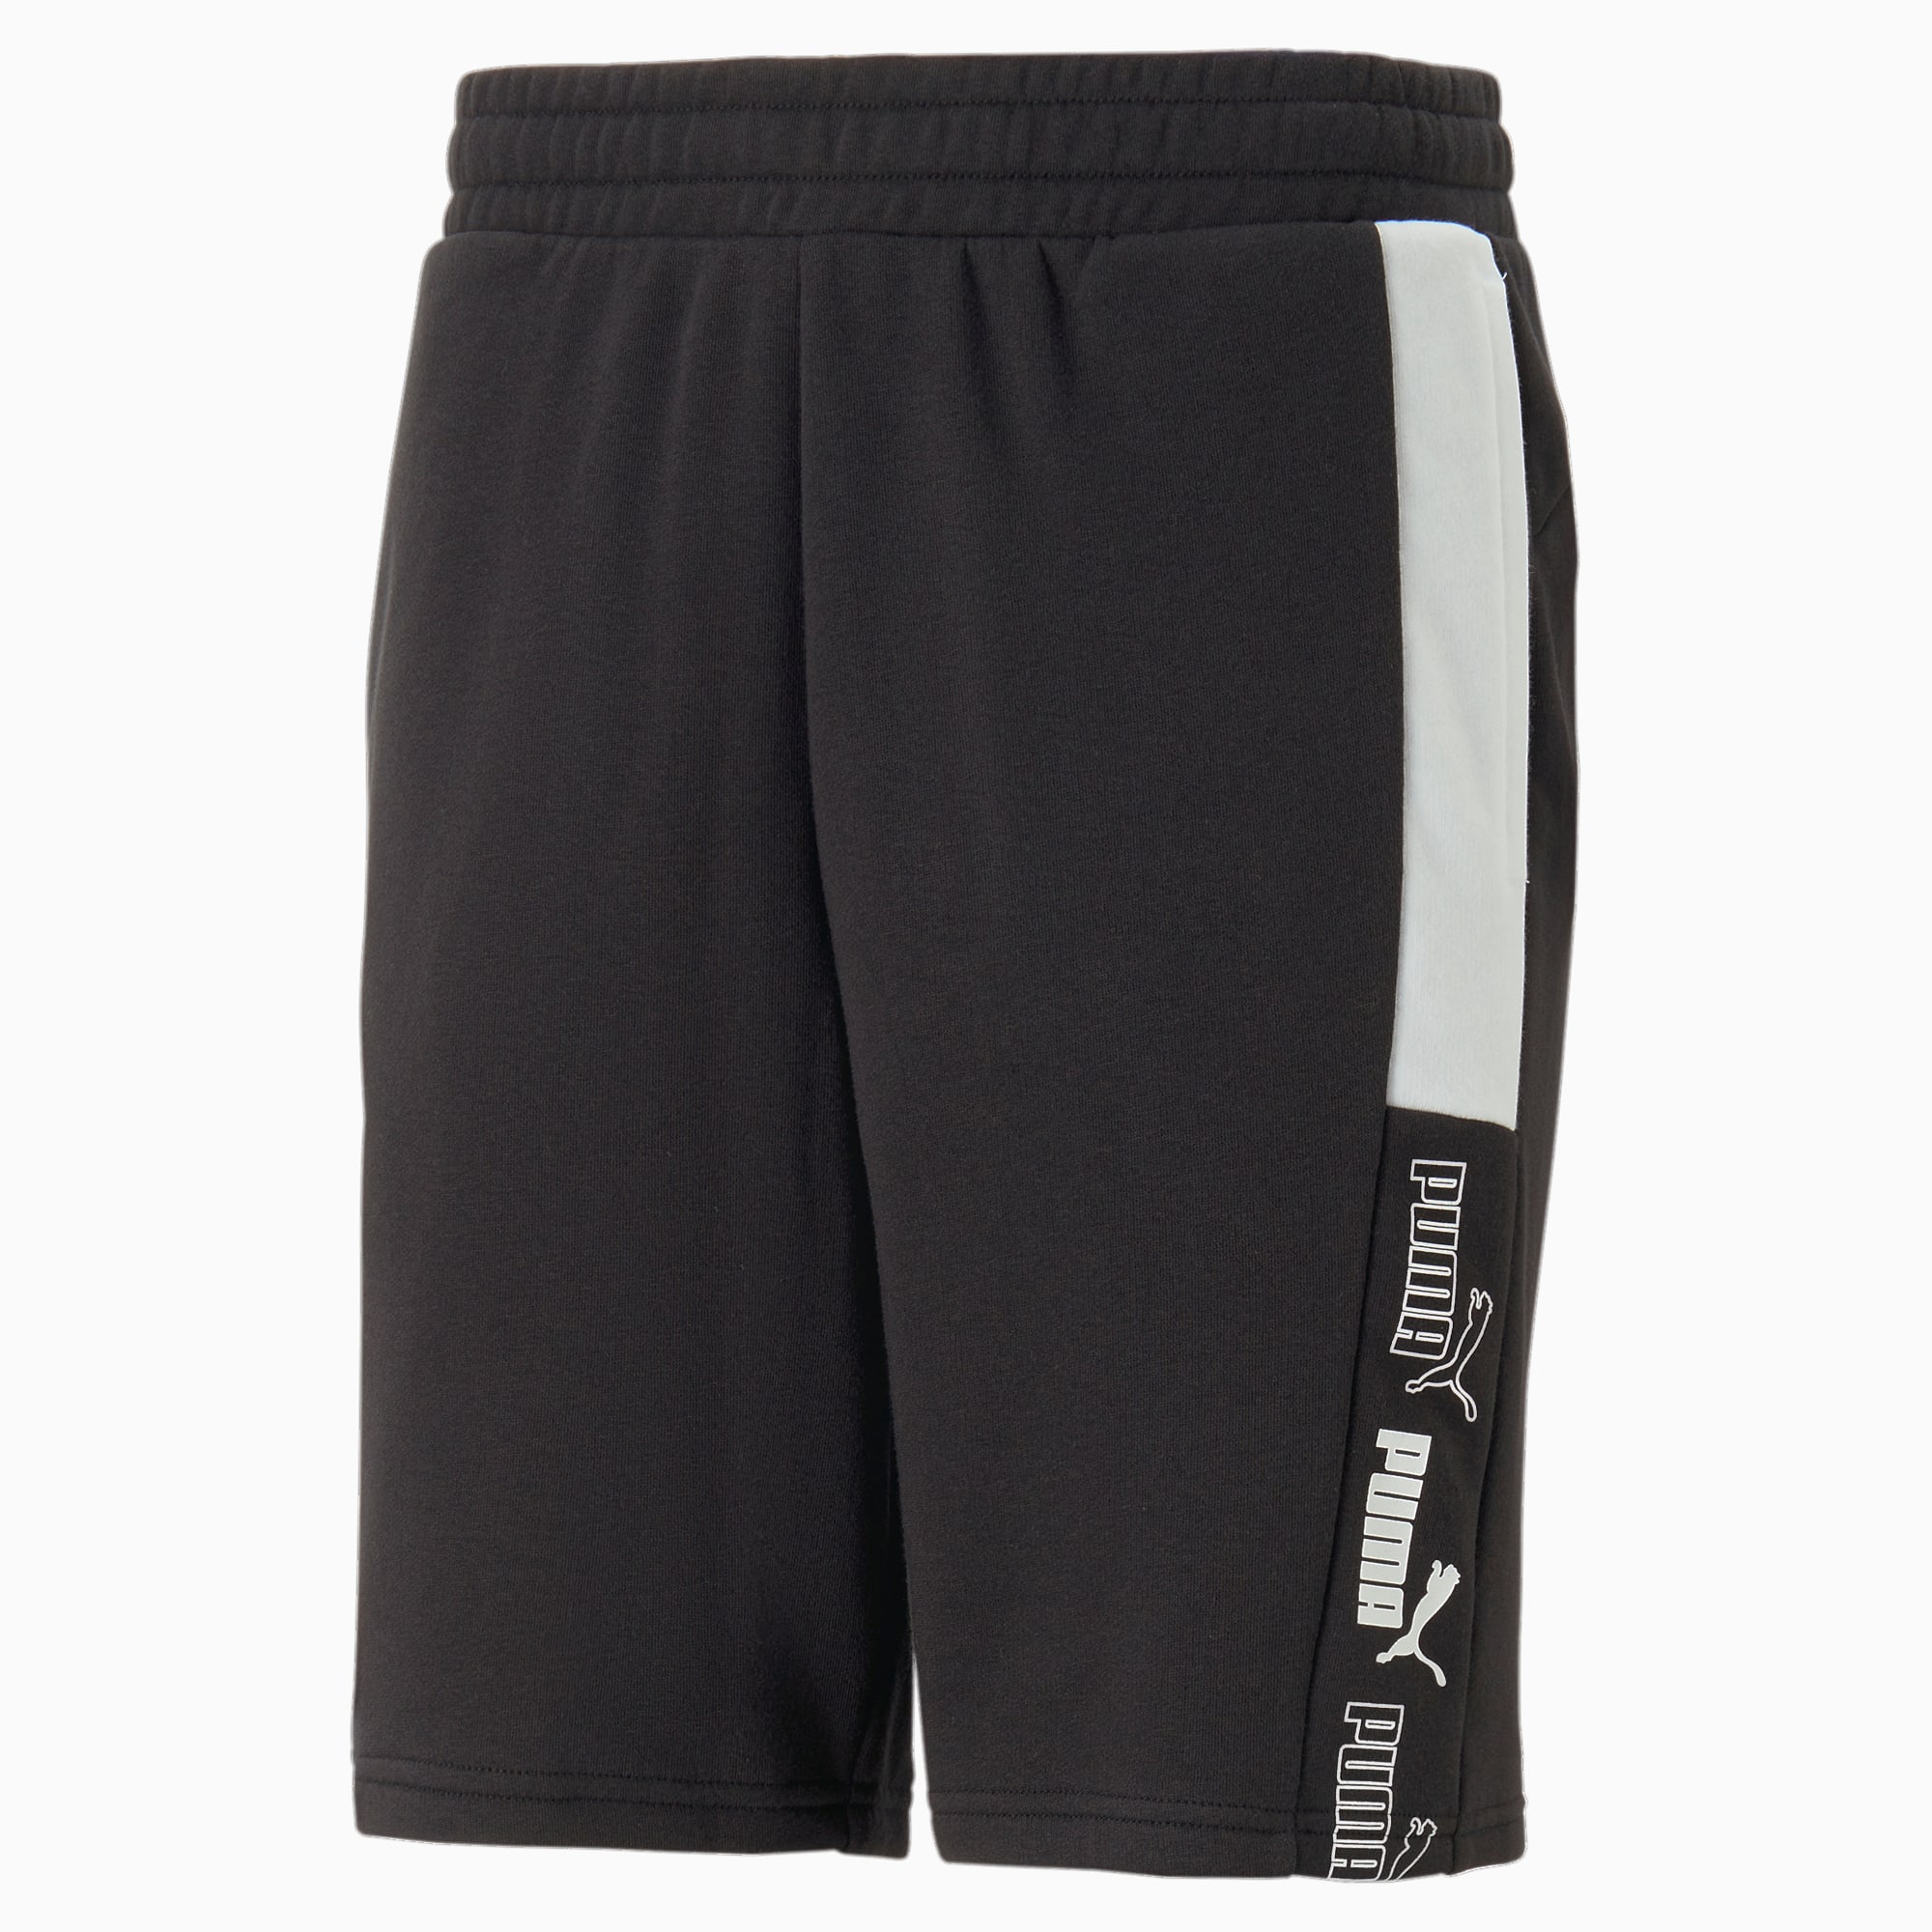 PUMA Block 9 Ft Shorts Men, Black/White, Size S, Clothing